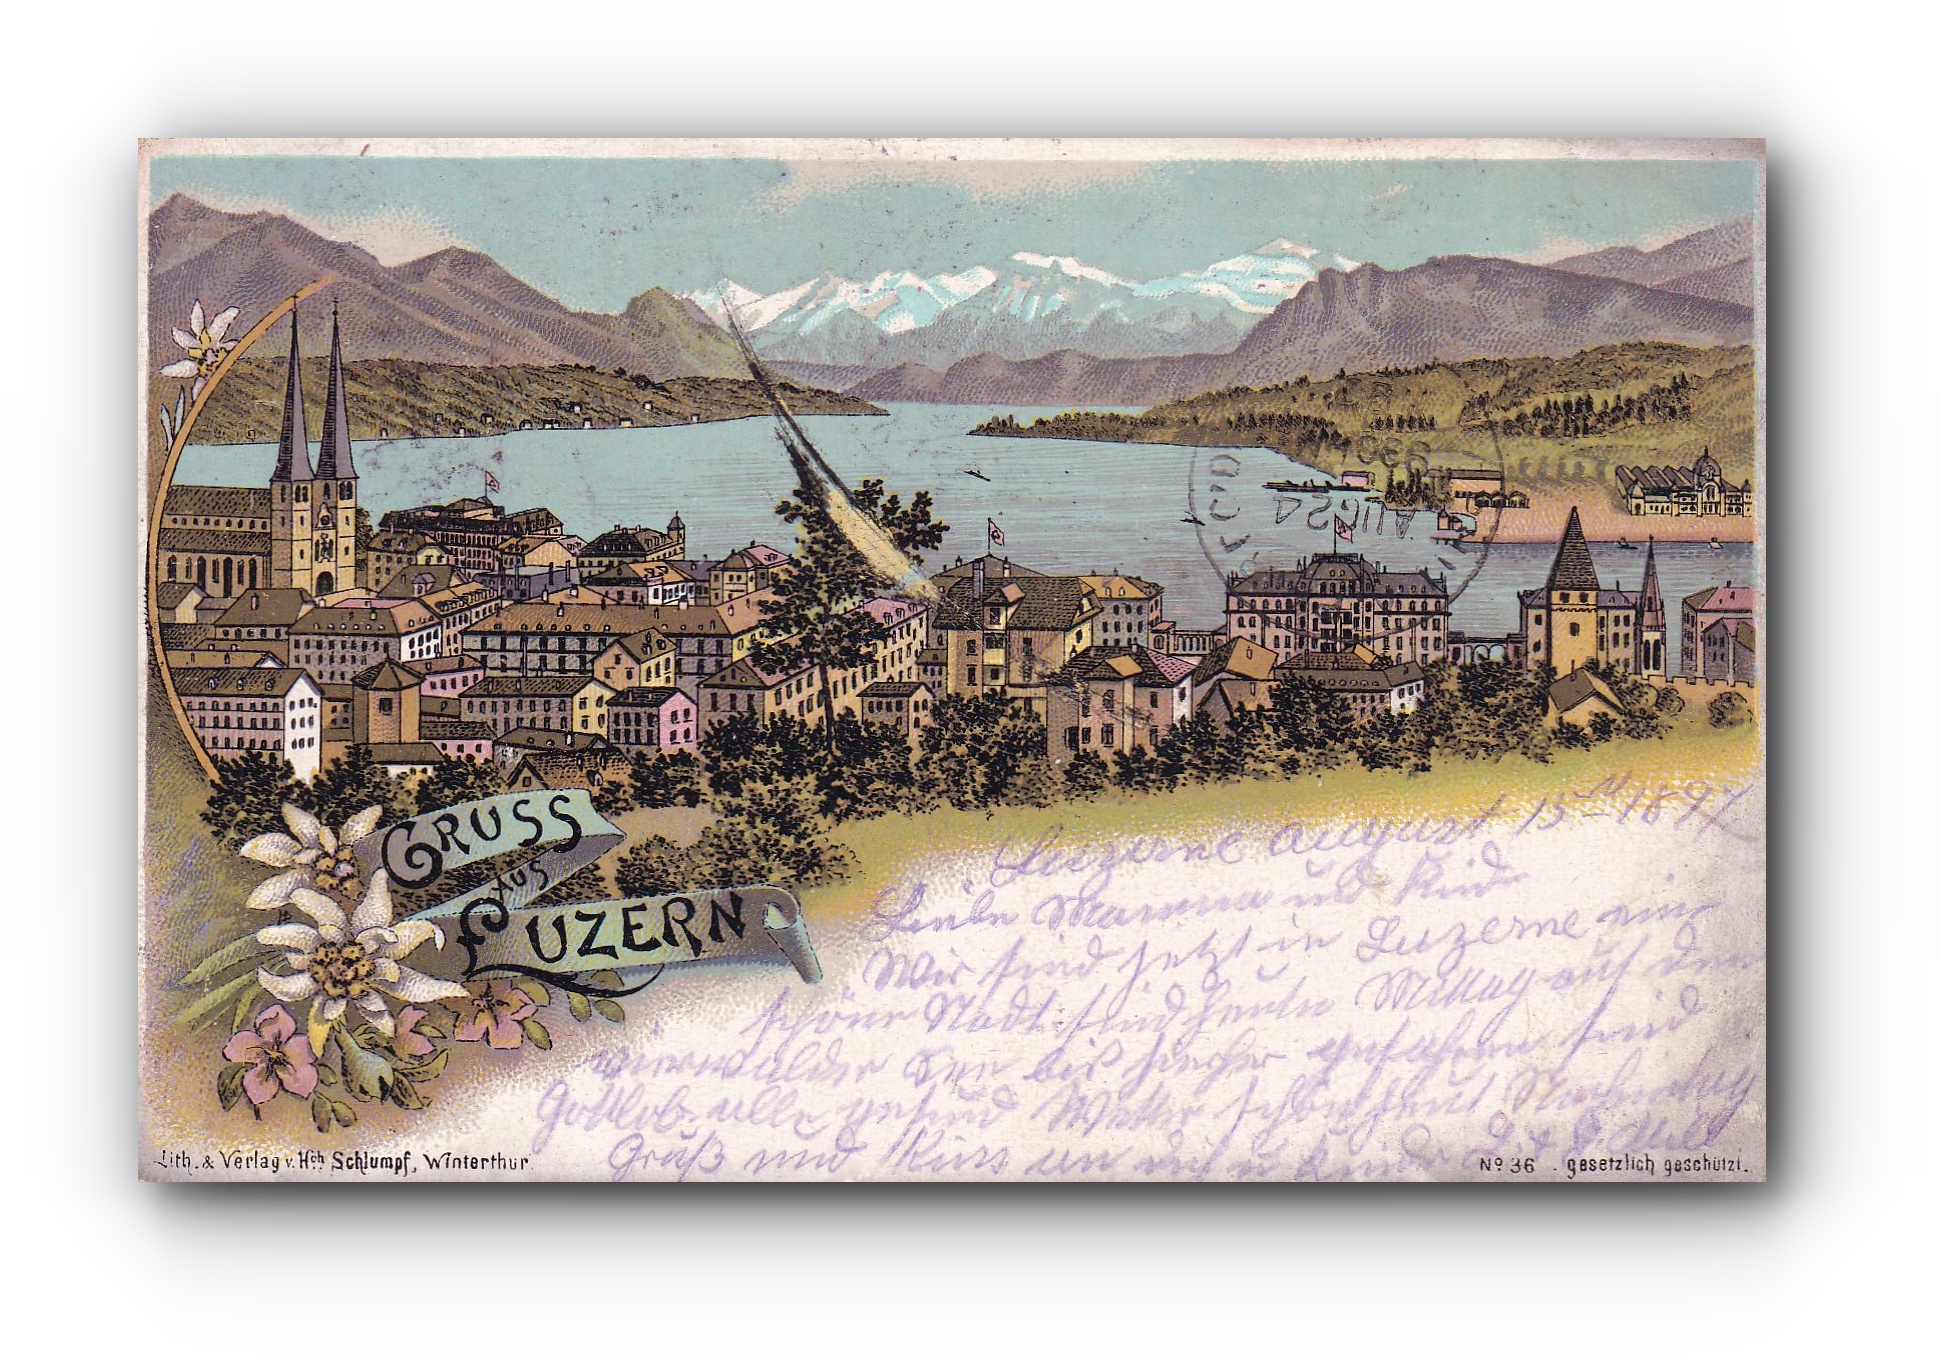 Gruss aus Luzern - 16.08.1897 - Bonjour de Lucerne - Greetings from Lucerne 